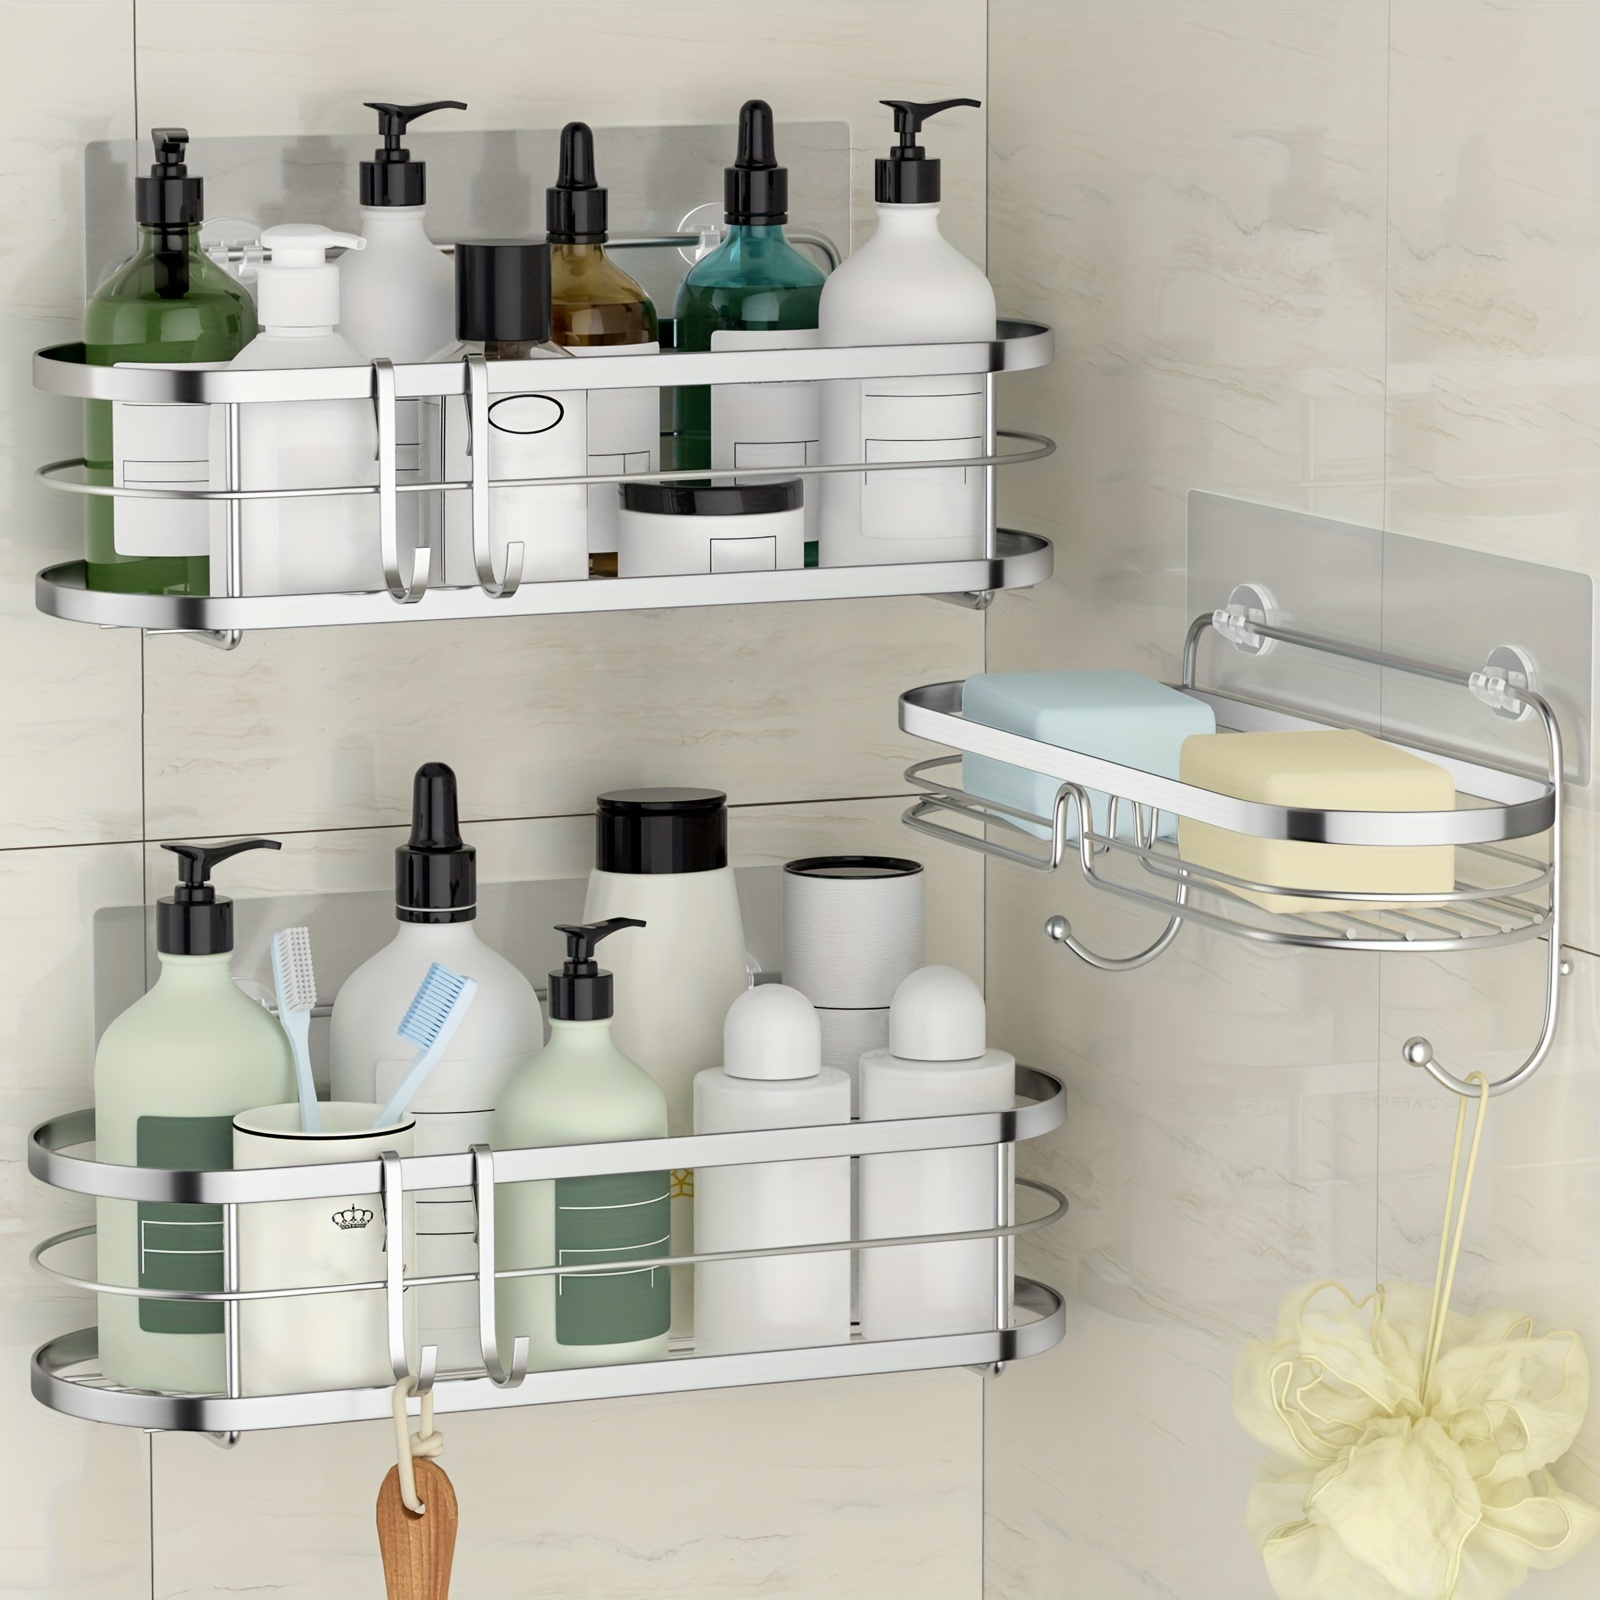 Detachable Soap Dish, Shower Soap Holder, Stainless Steel Soap